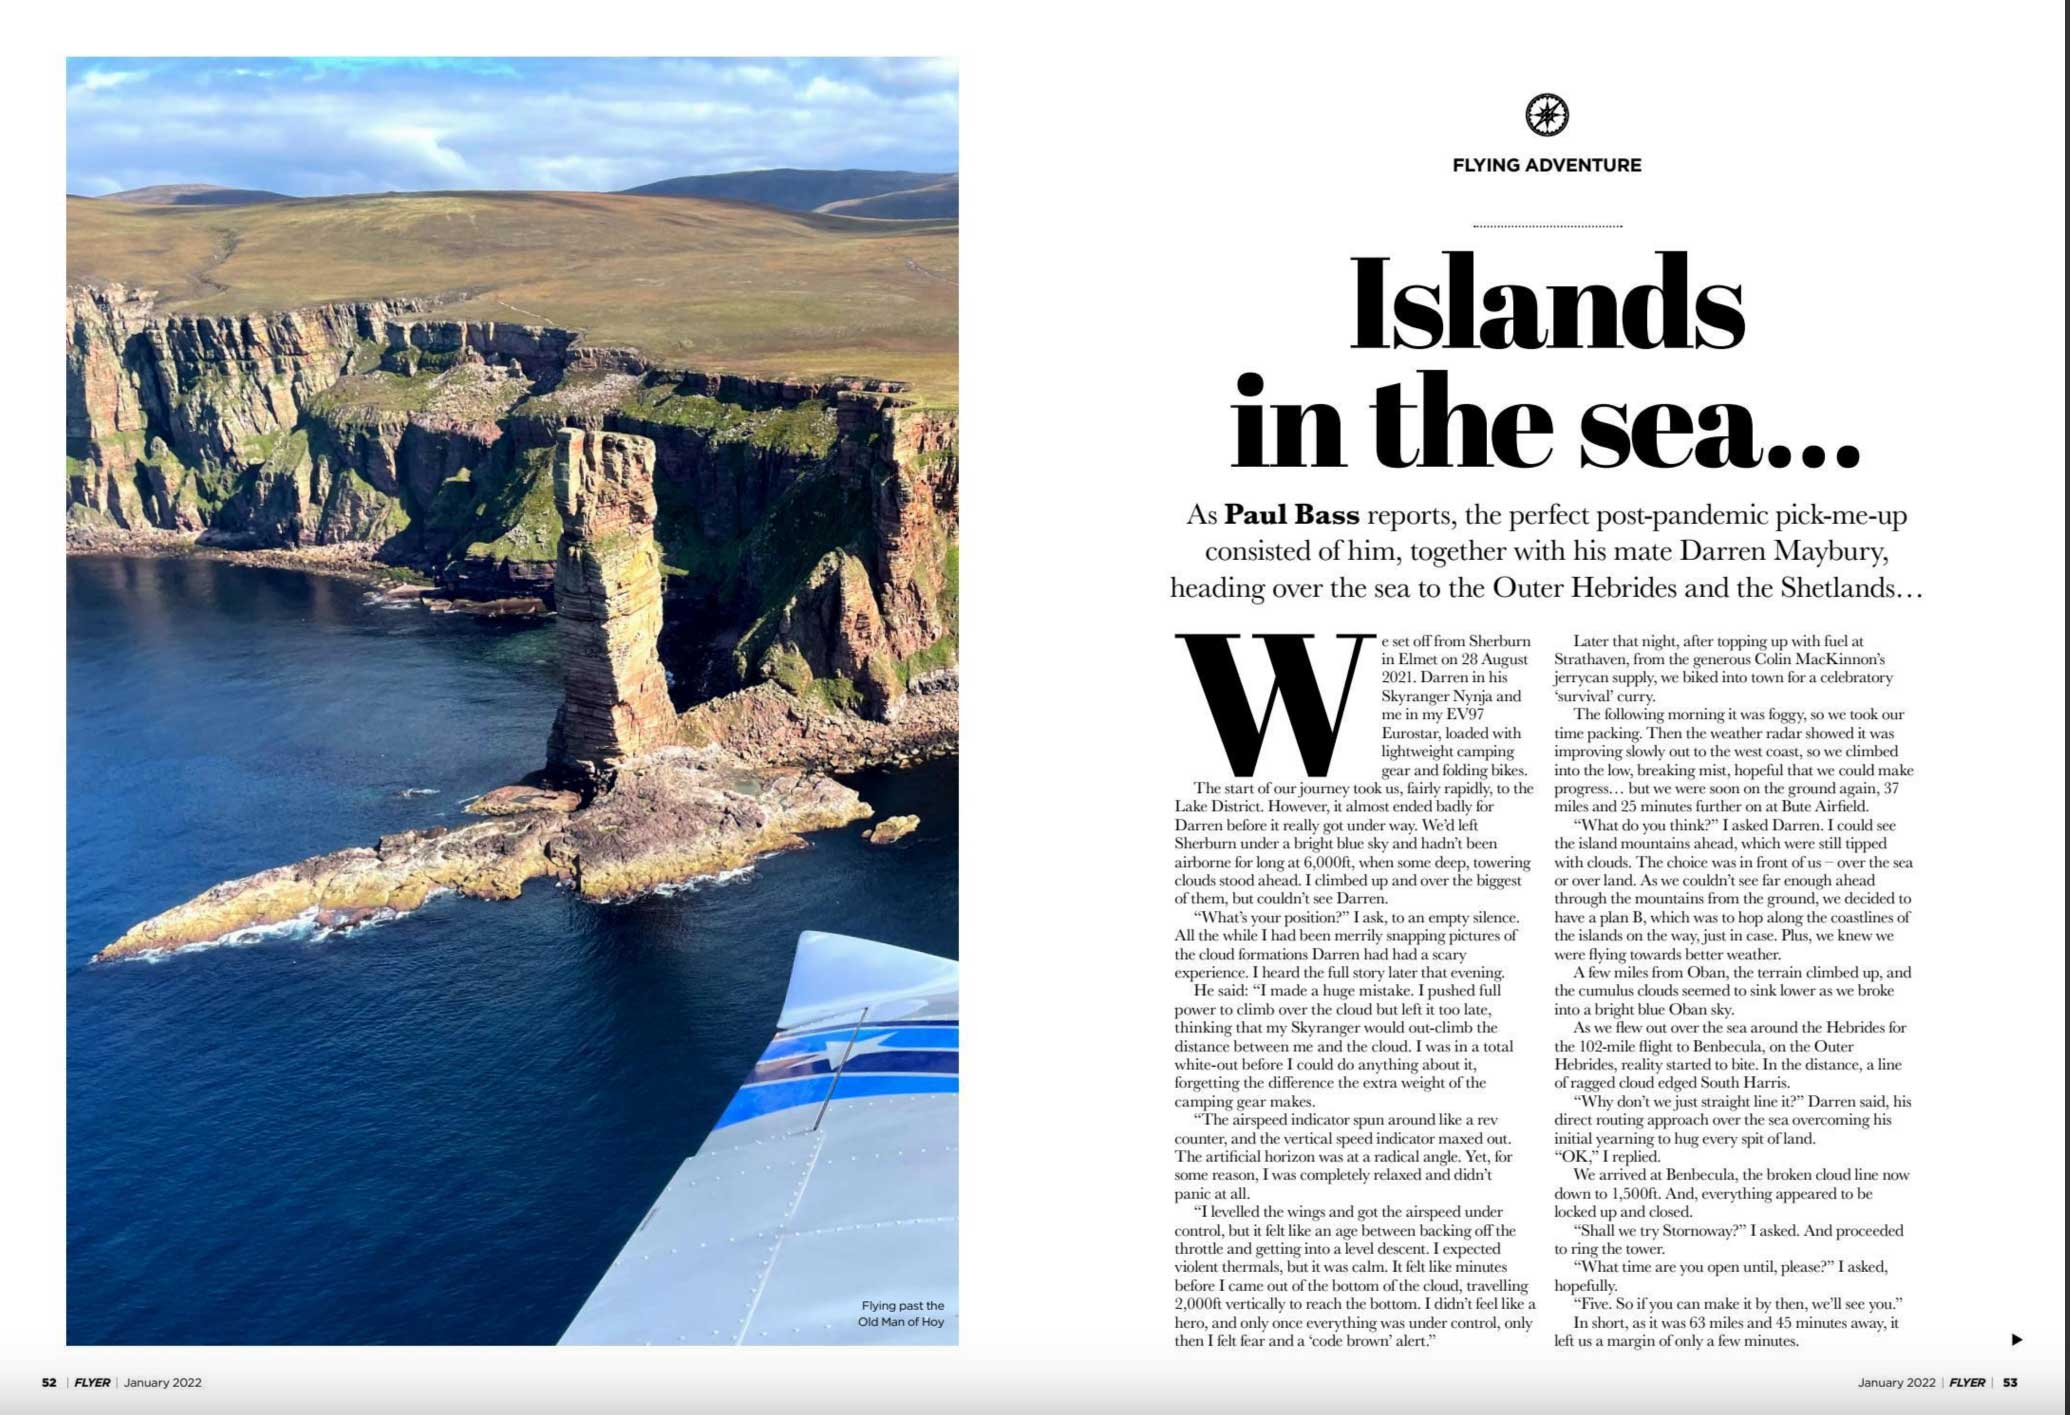 Flying Adventure to Shetland